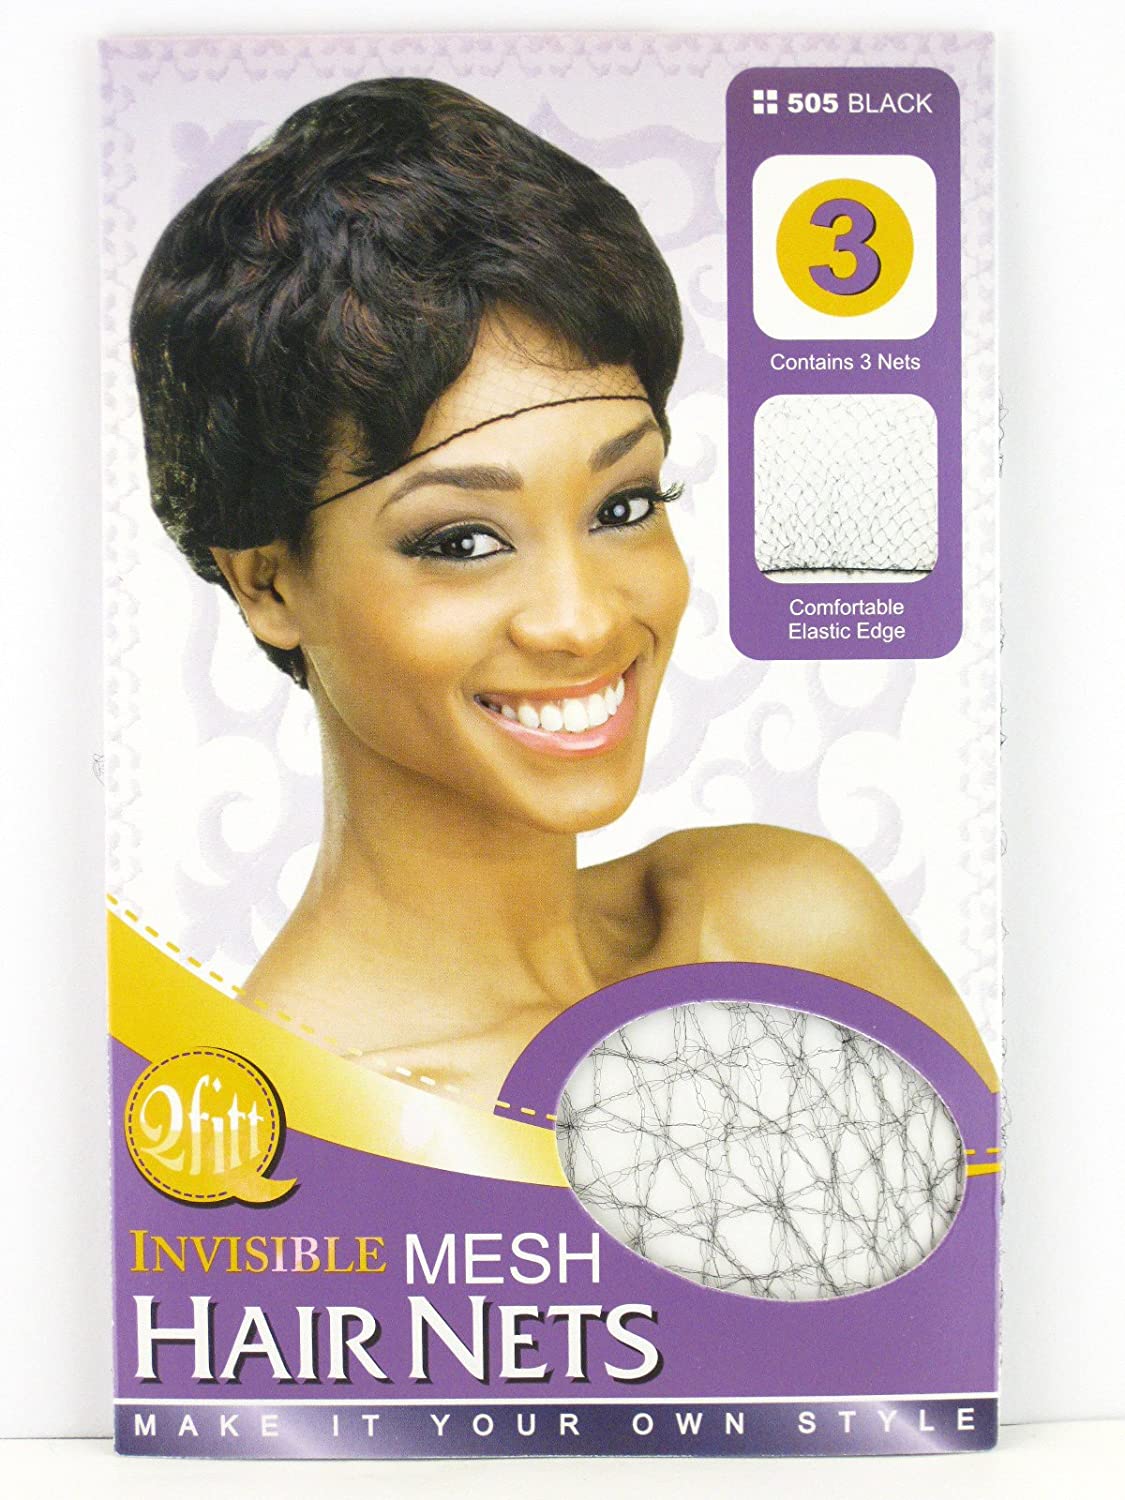 QFITT INVISIBLE MESH HAIR NETS (3) #505 BLK